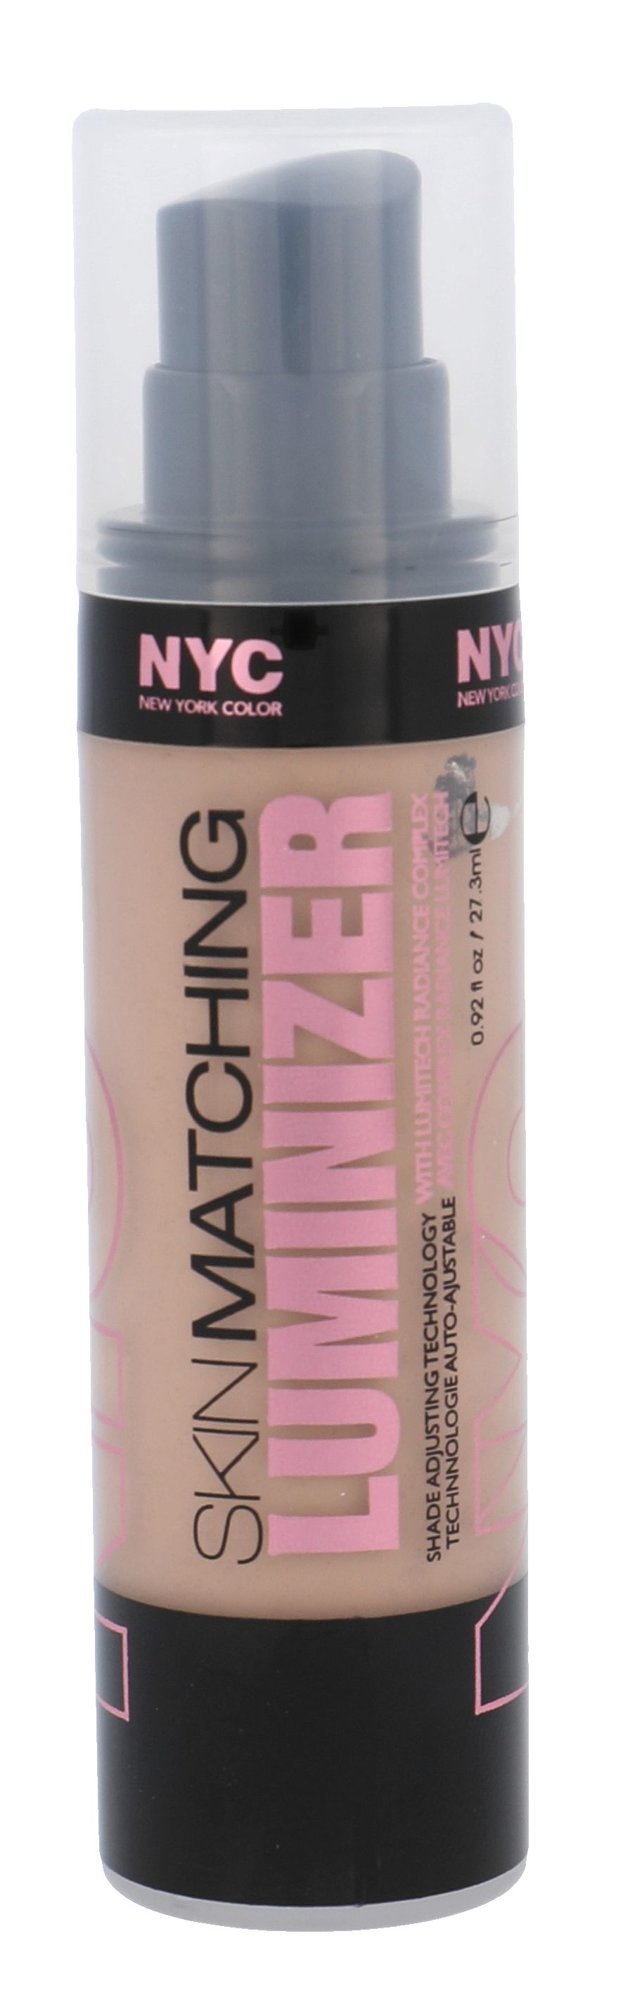 NYC New York Color Skin Matching Luminizer Foundation